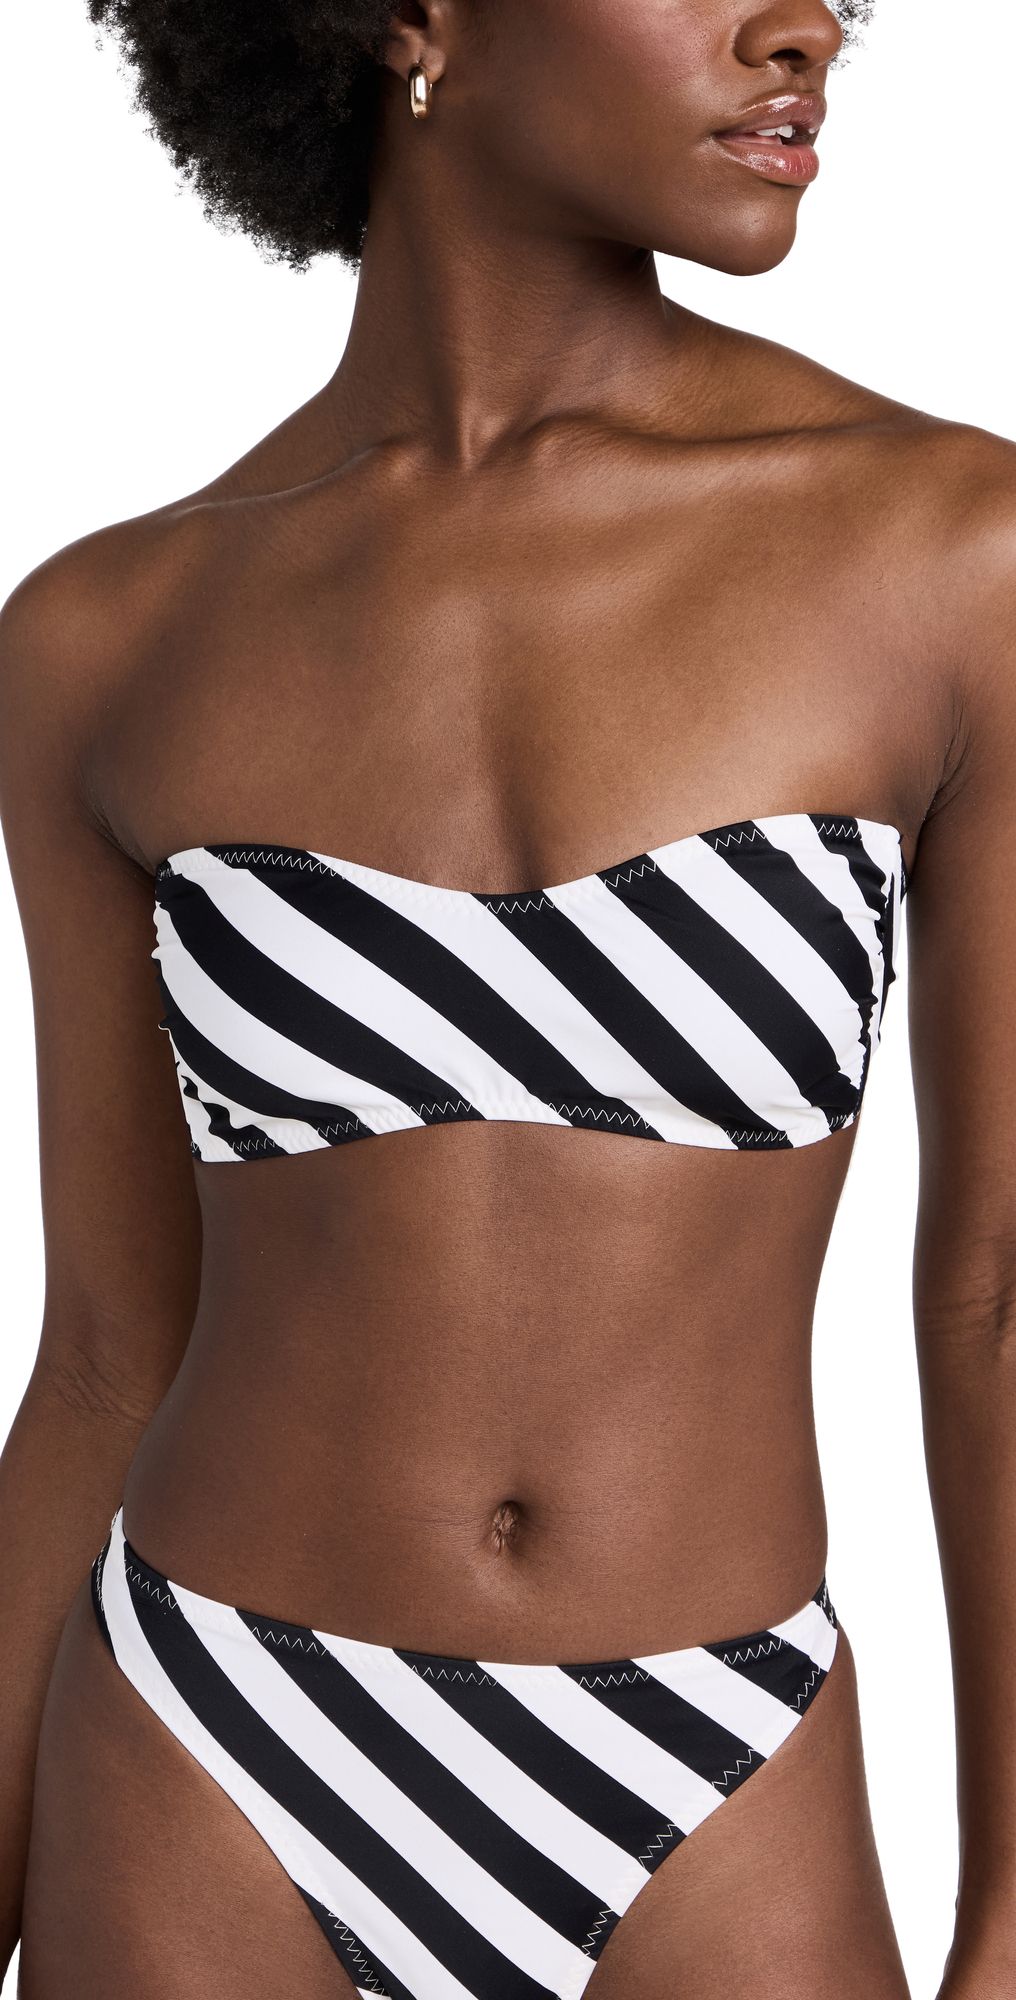 Sunglass Bikini Bra Top | Shopbop